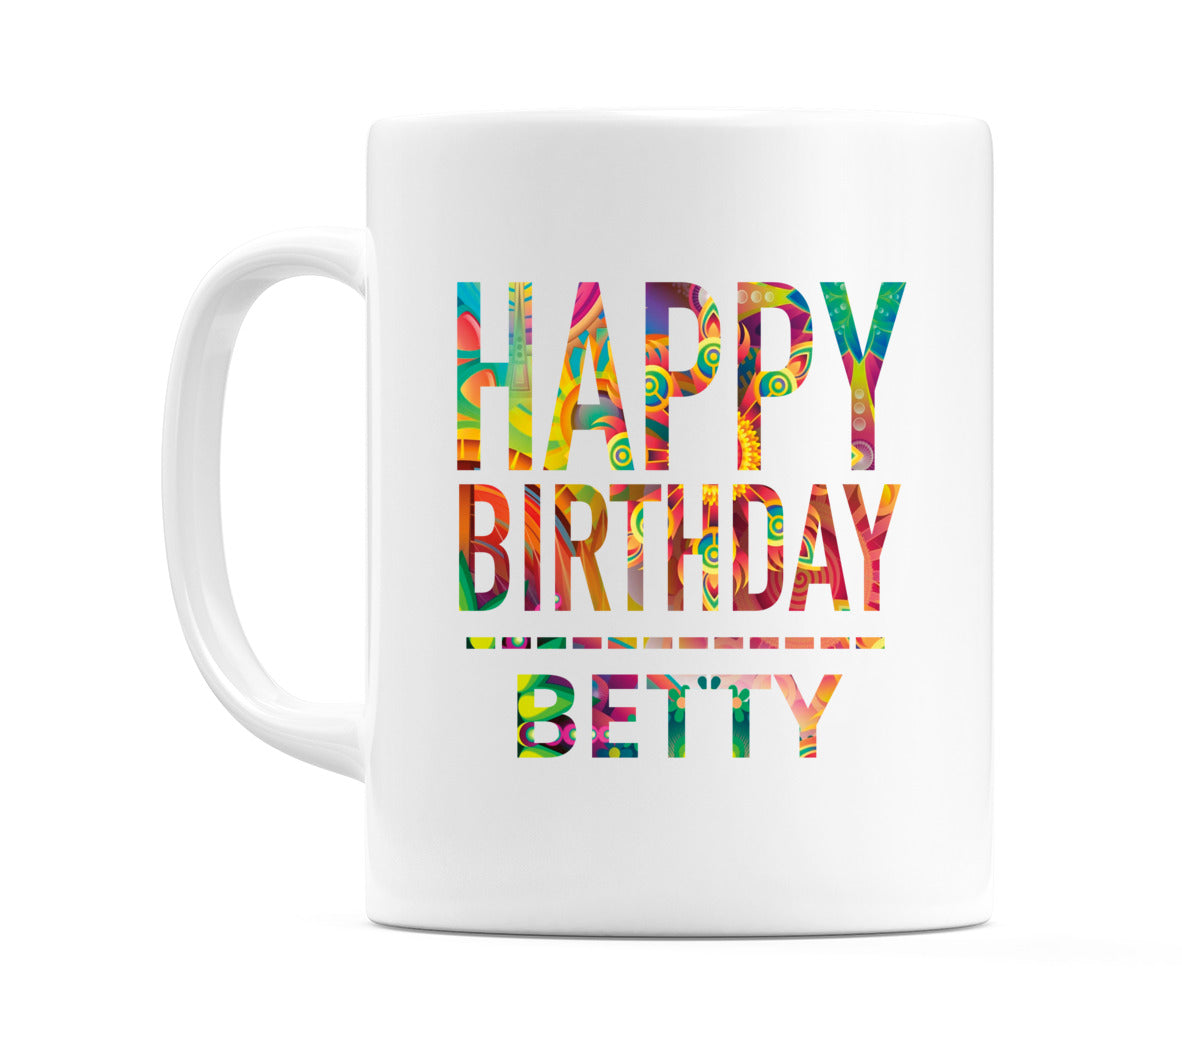 Happy Birthday Betty (Tie Dye Effect) Mug Cup by WeDoMugs